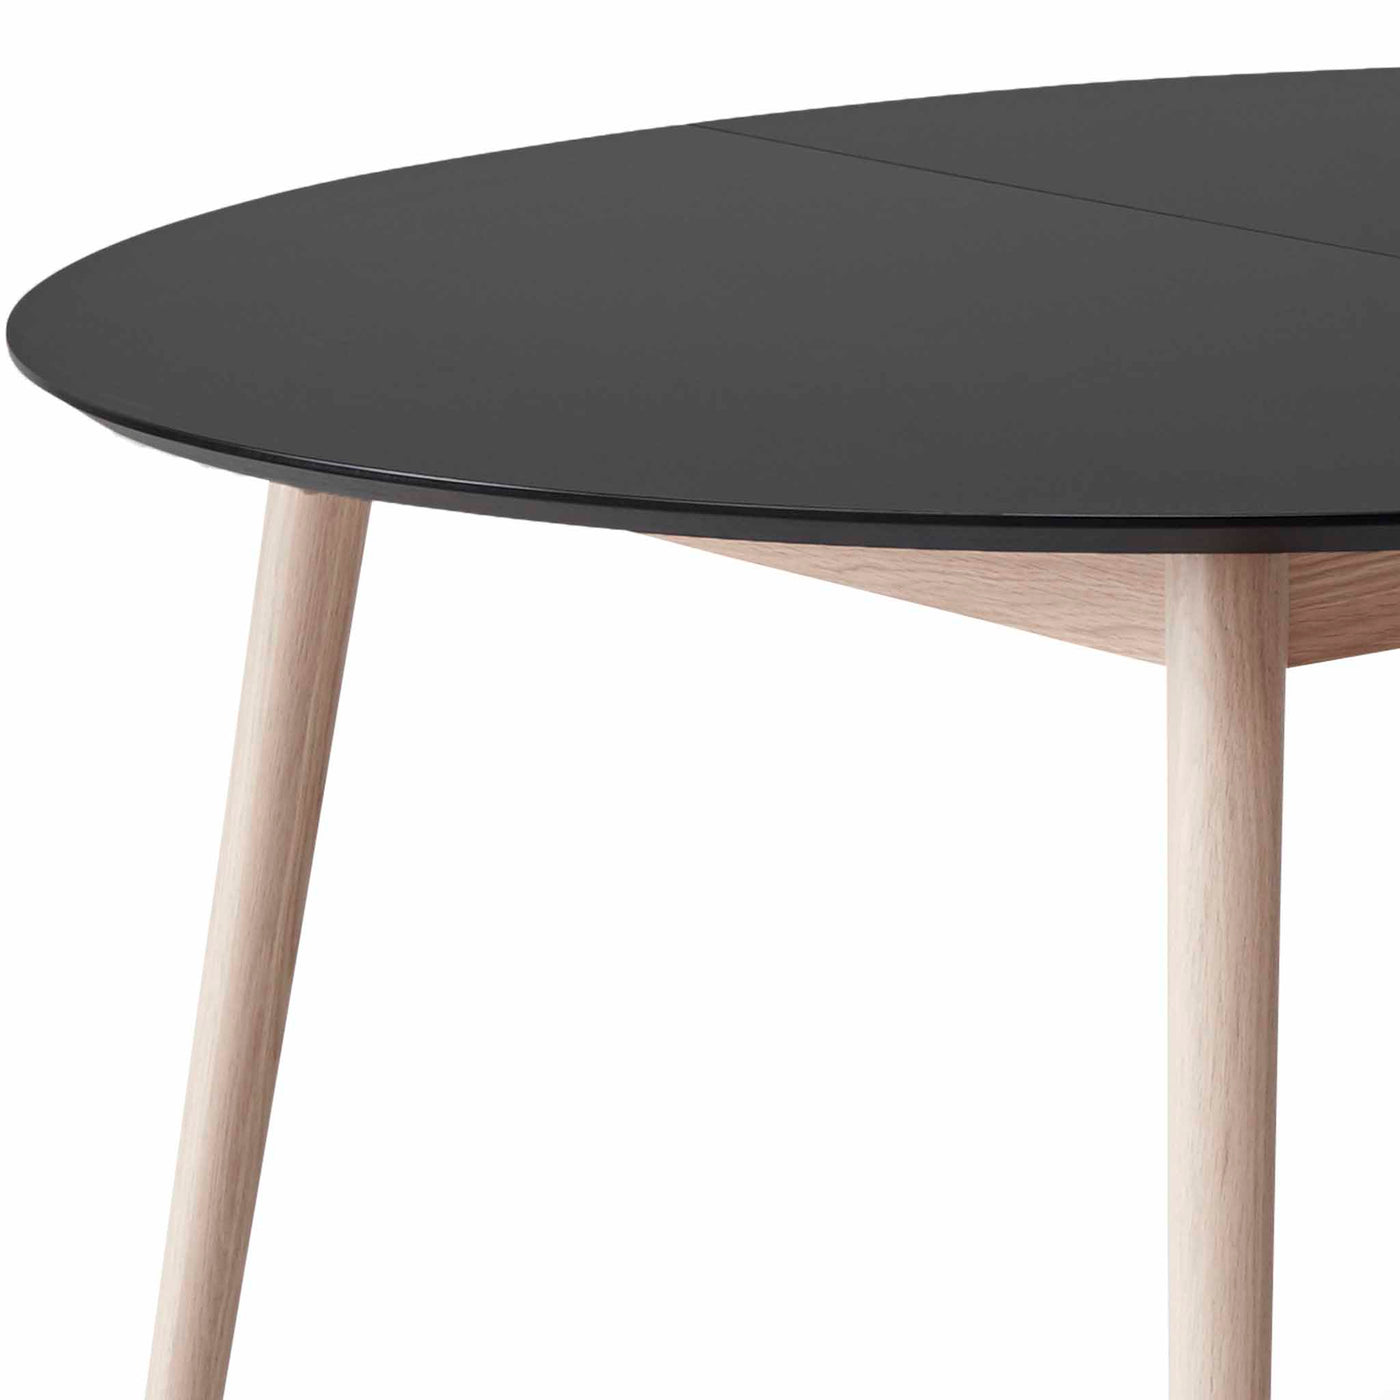 Meza by Hammel Round spisebord med bordplade i sort nano laminat med ben i massivt egetræ.